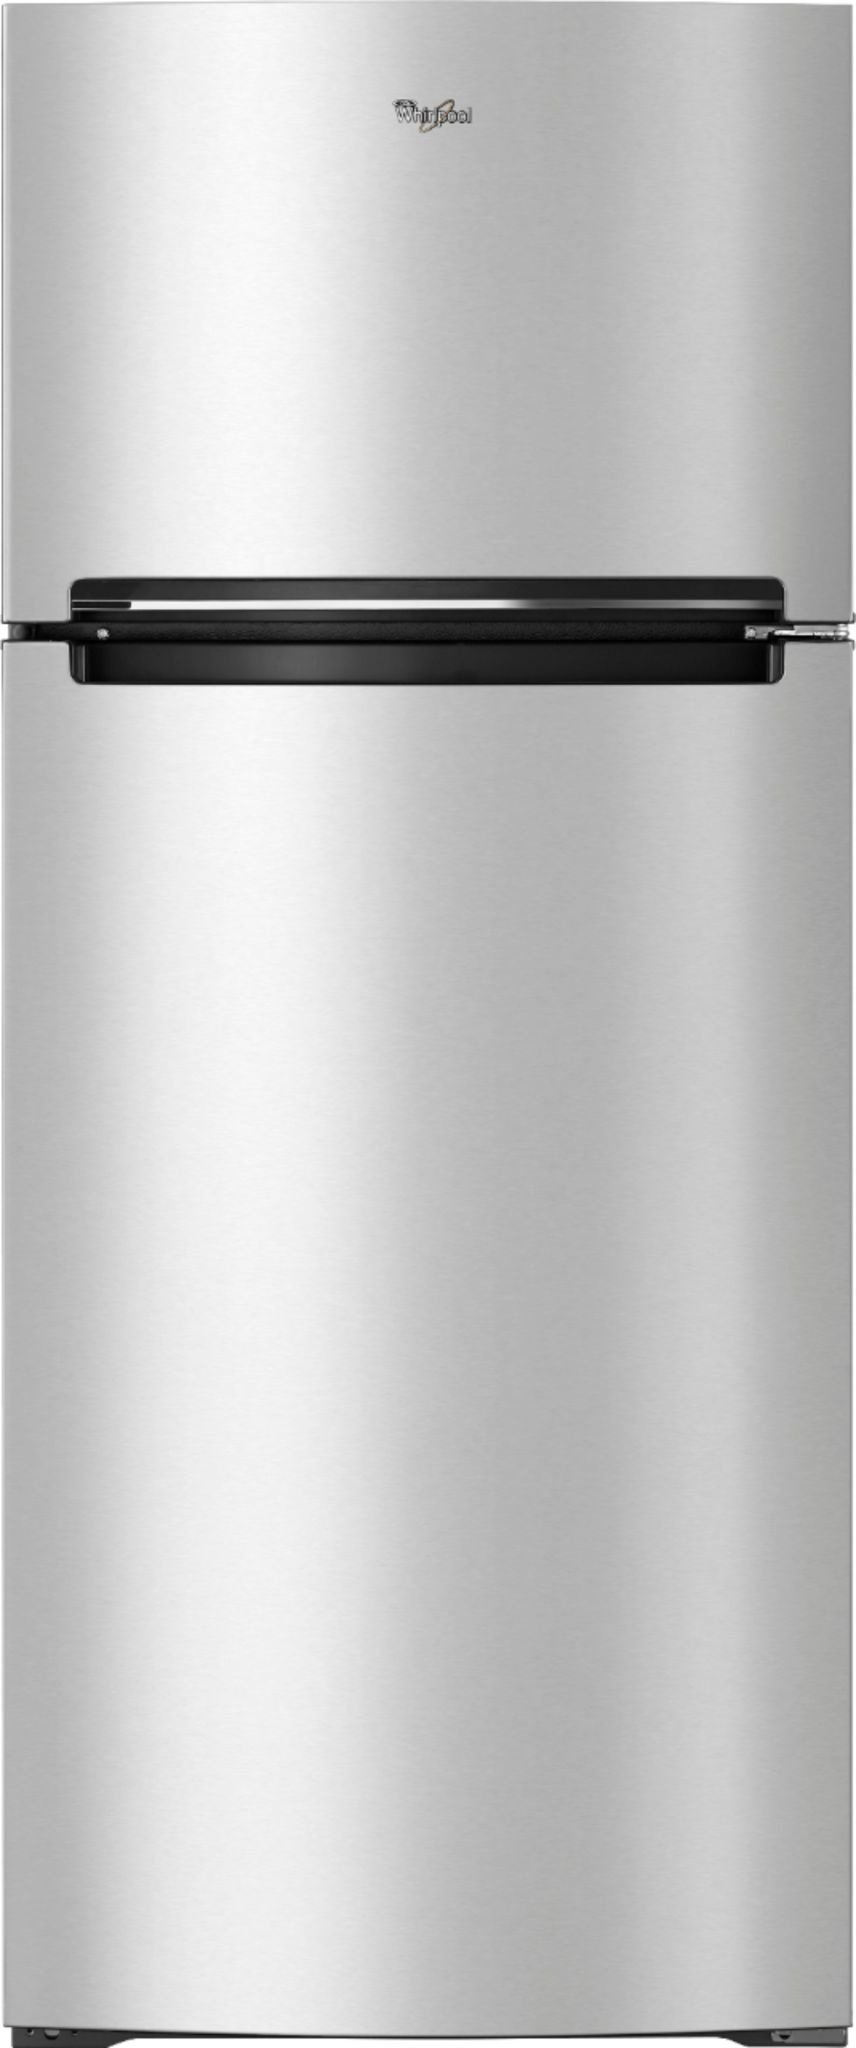 Whirlpool *Whirlpool  WRT518SZFM  17.6-cu ft Top-Freezer Refrigerator Stainless Steel